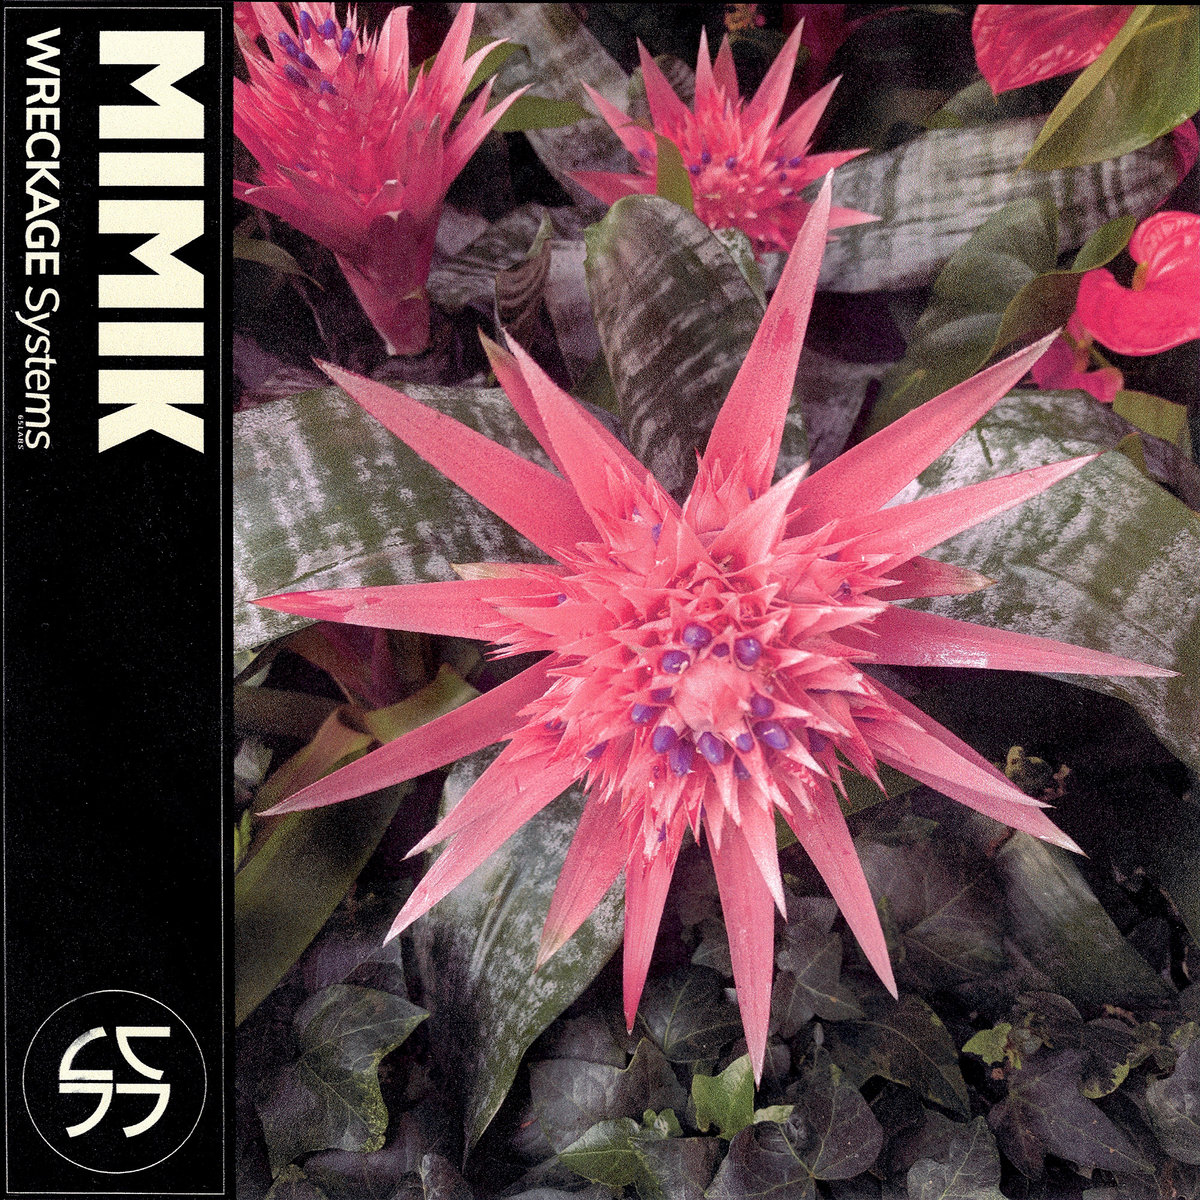 65daysofstatic – Mimik (EP) (2021) [Official Digital Download 24bit/44,1kHz]